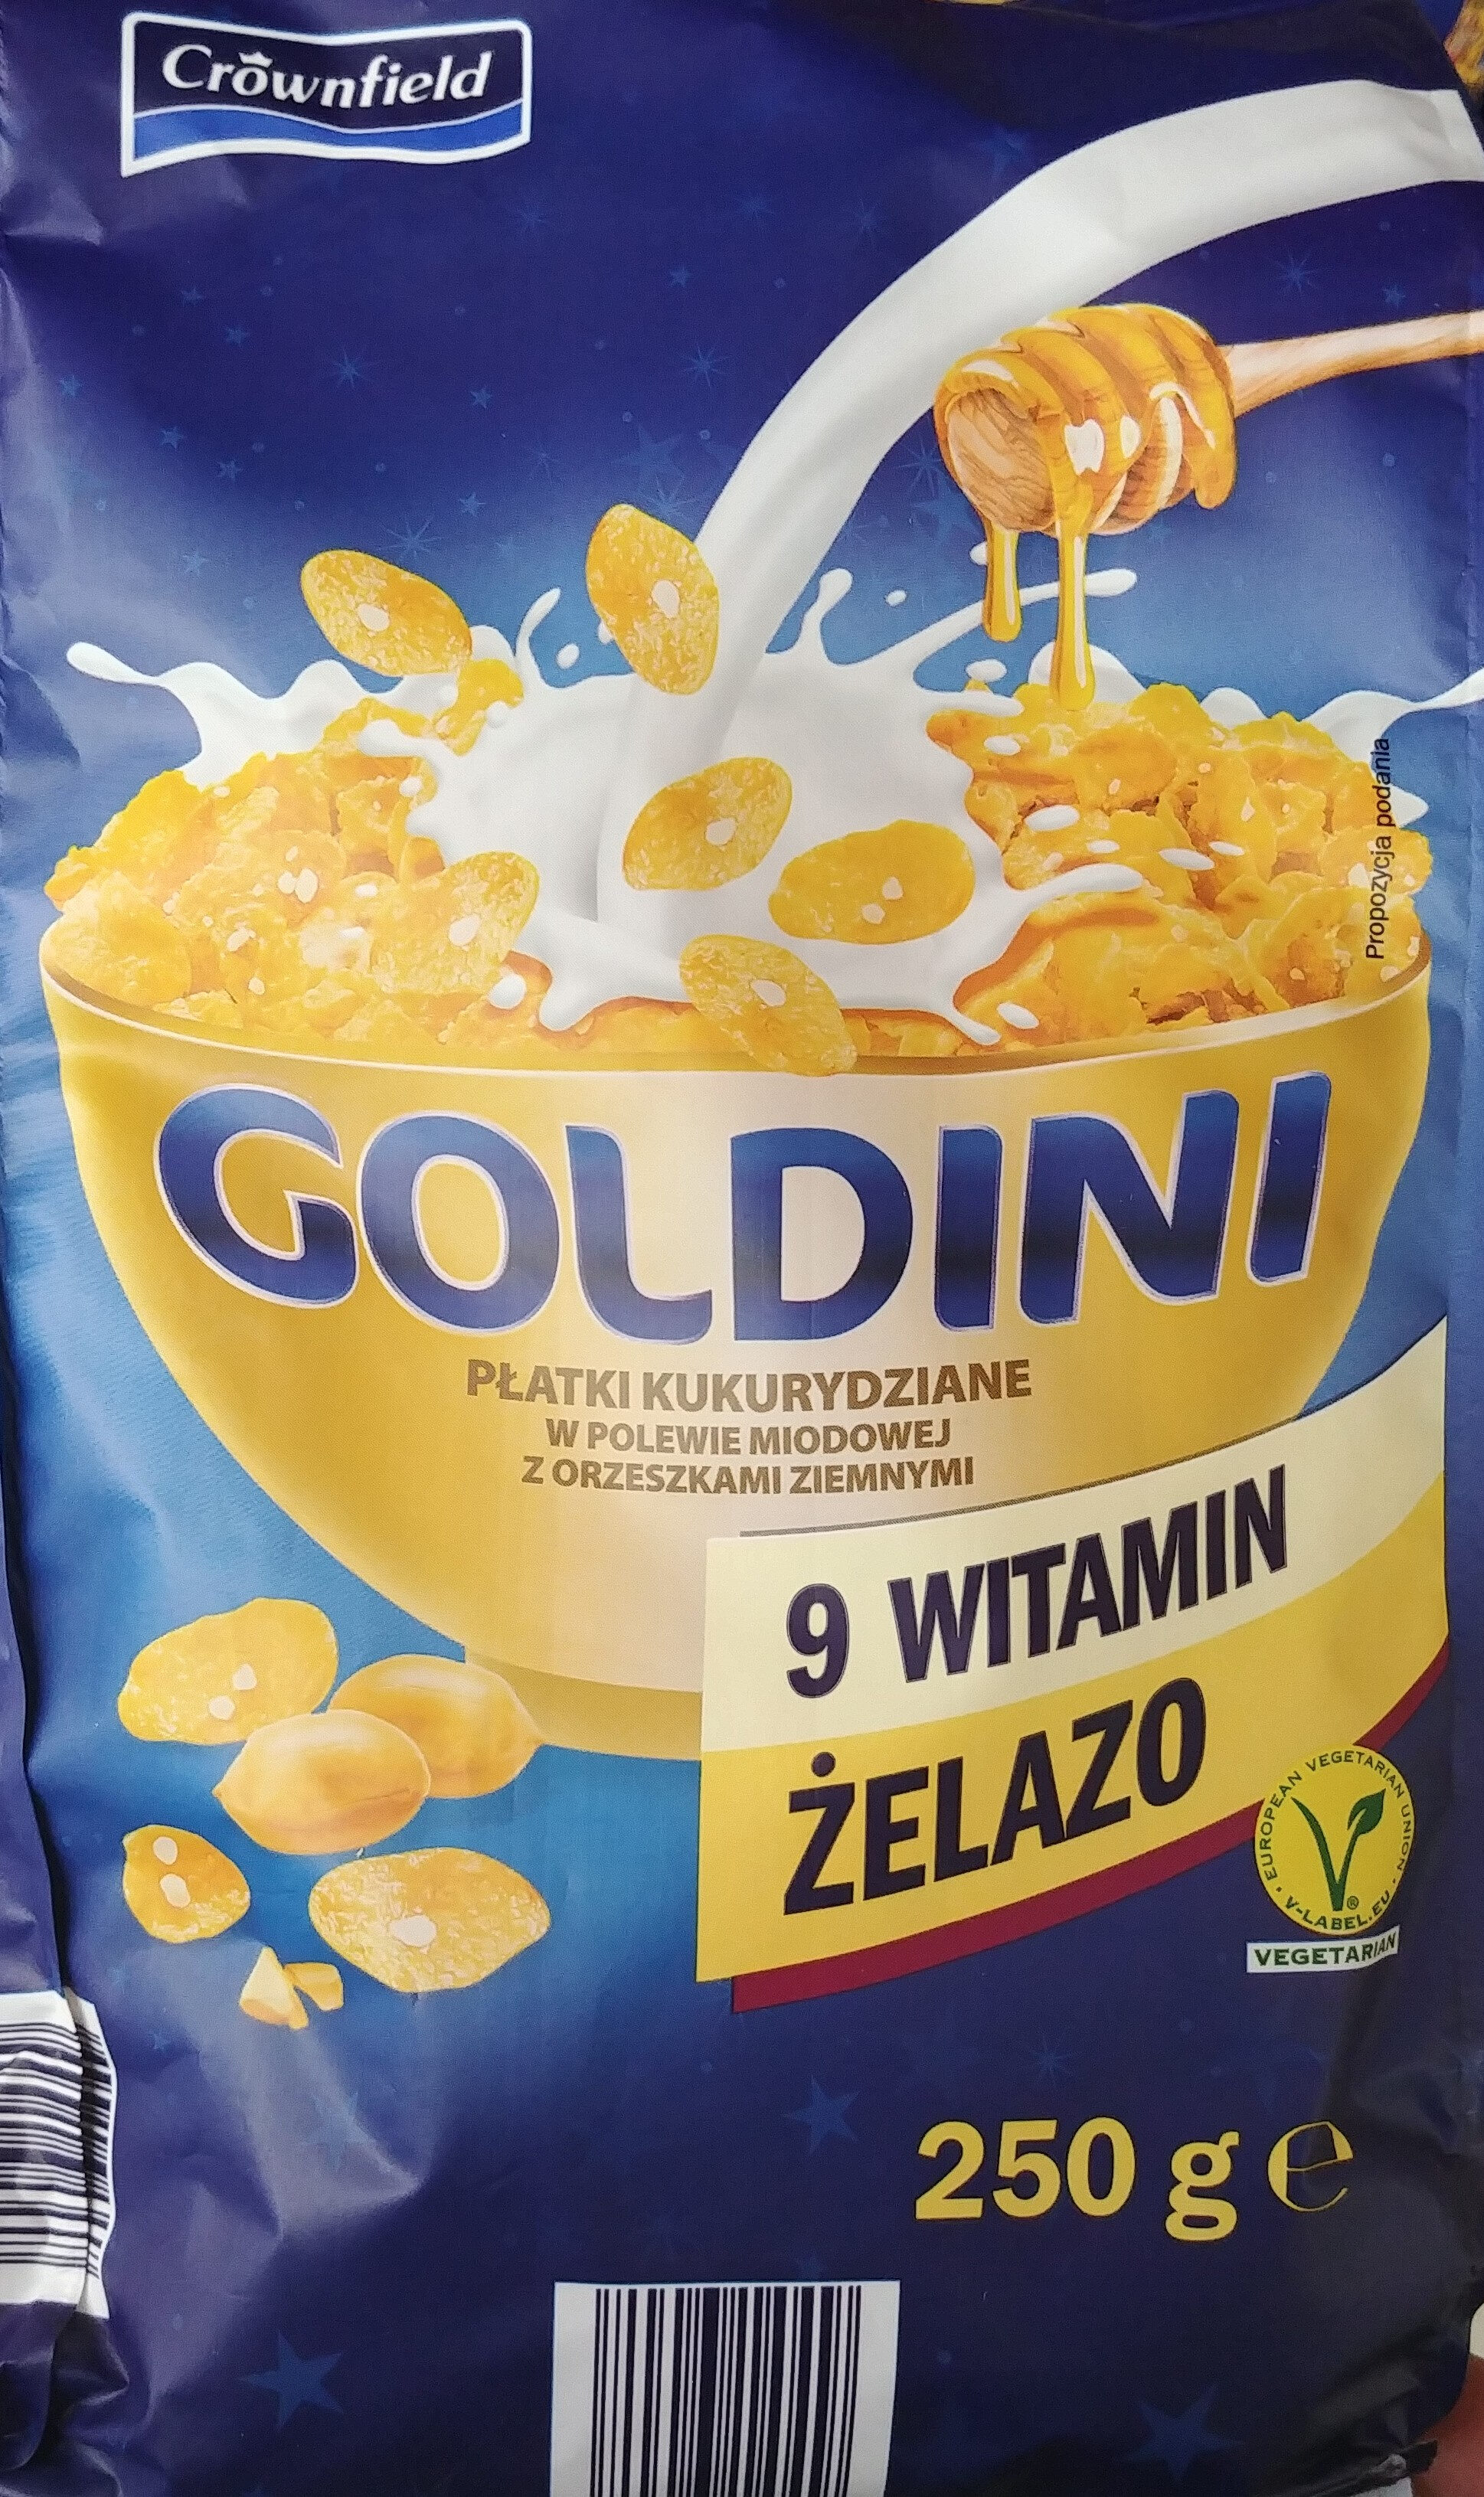 Goldini - Produkt